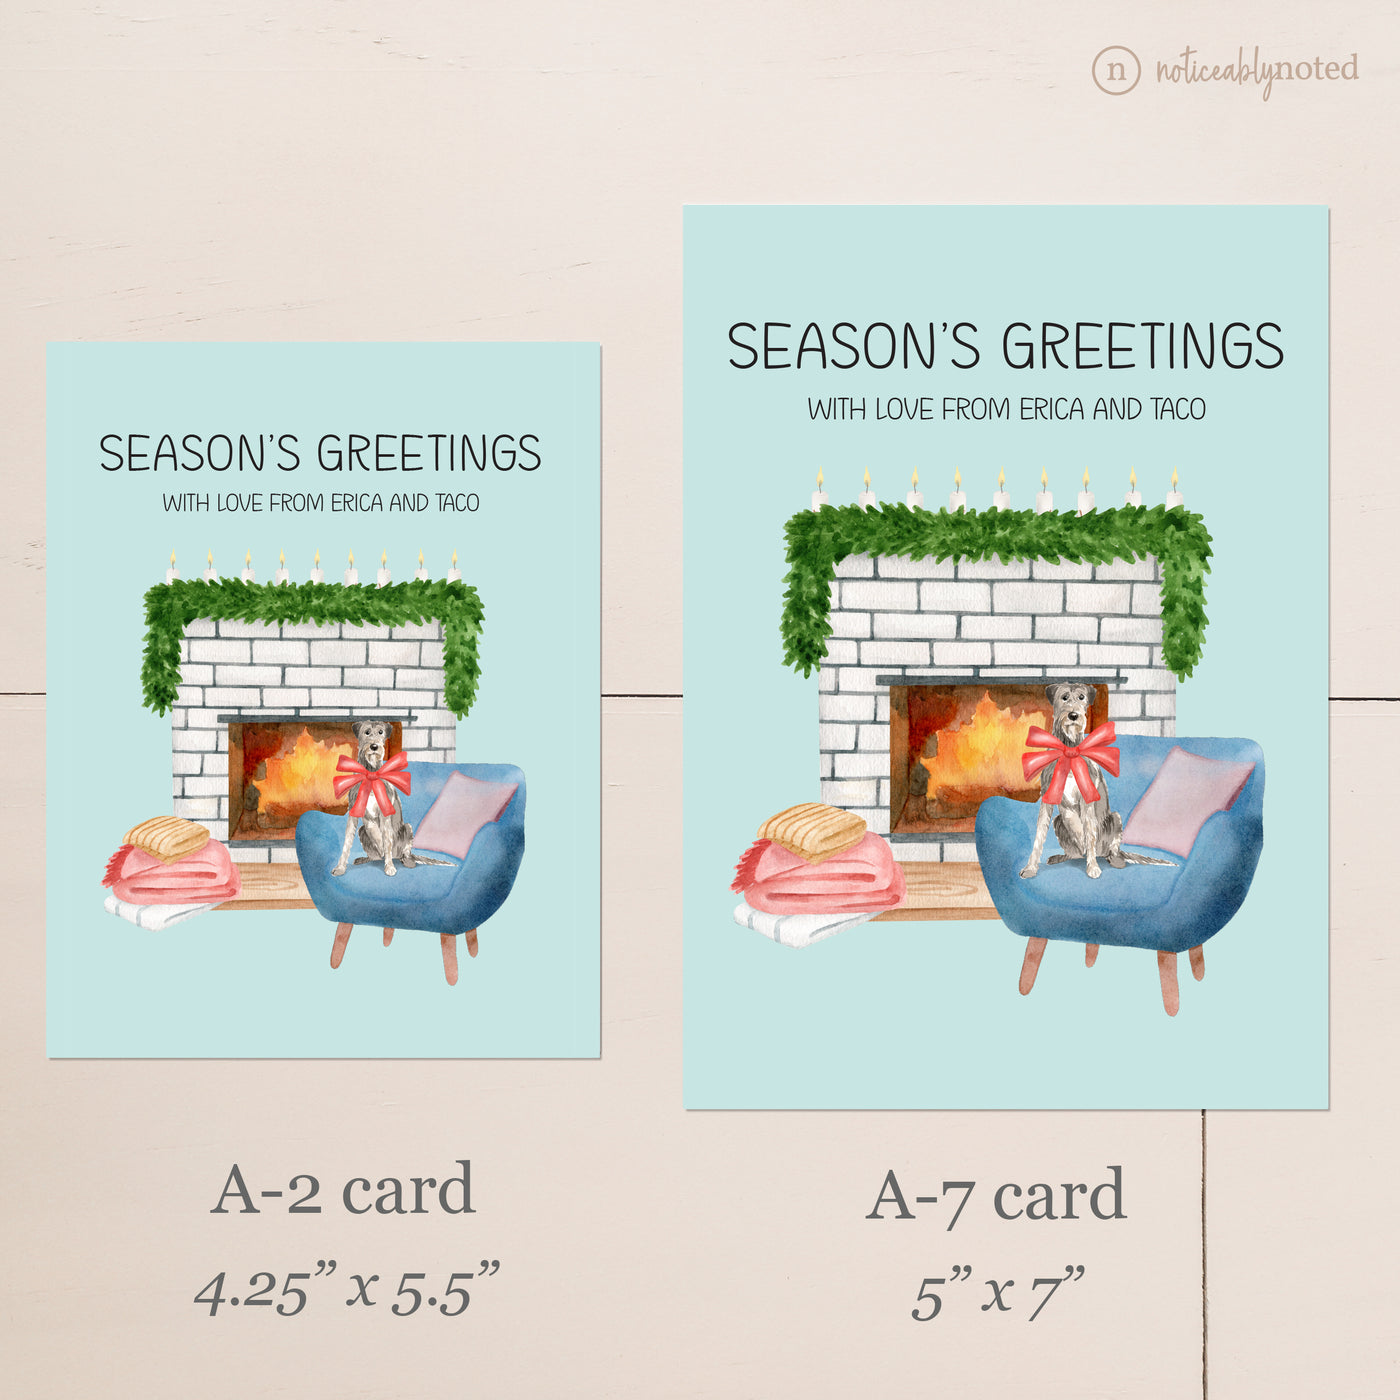 Irish Wolfhound Christmas Cards